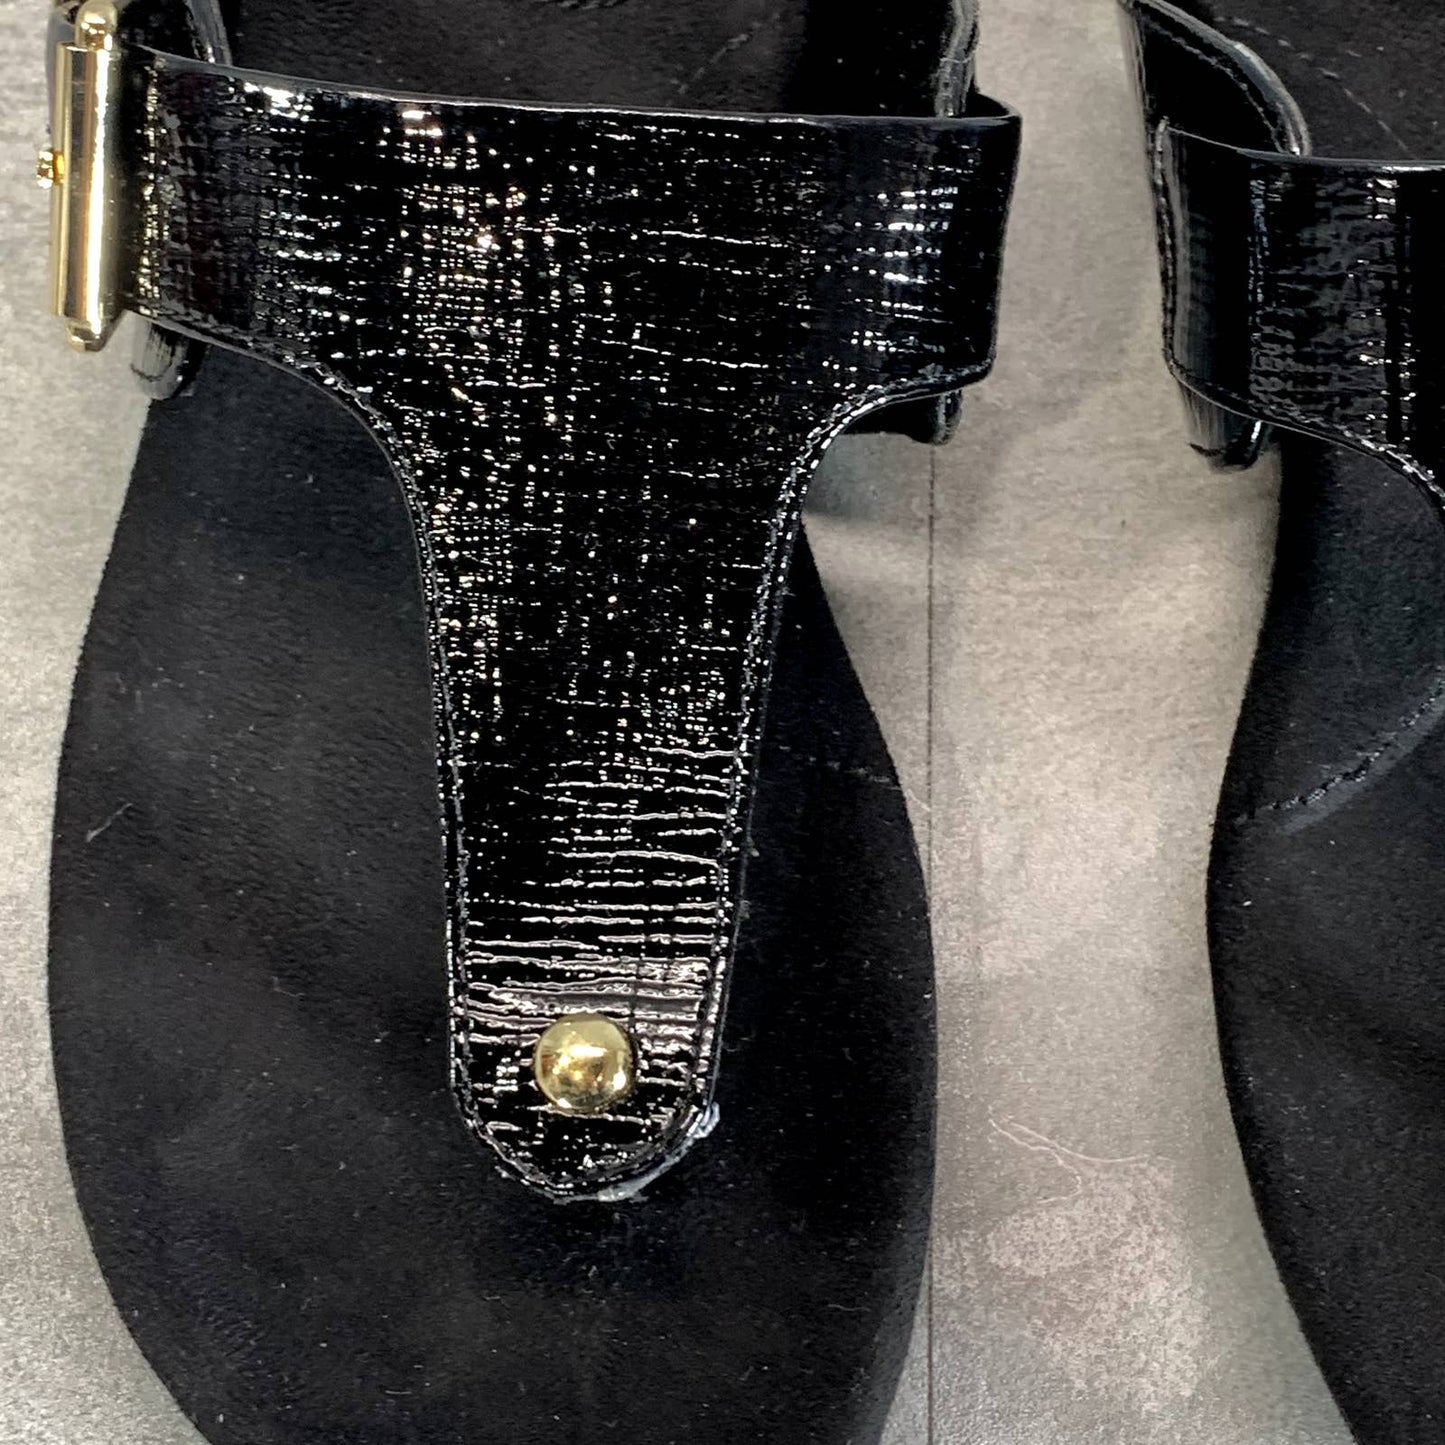 GIANI BERNINI Women's Black Rivver Memory-Foam Wedge Thong Sandals SZ 6